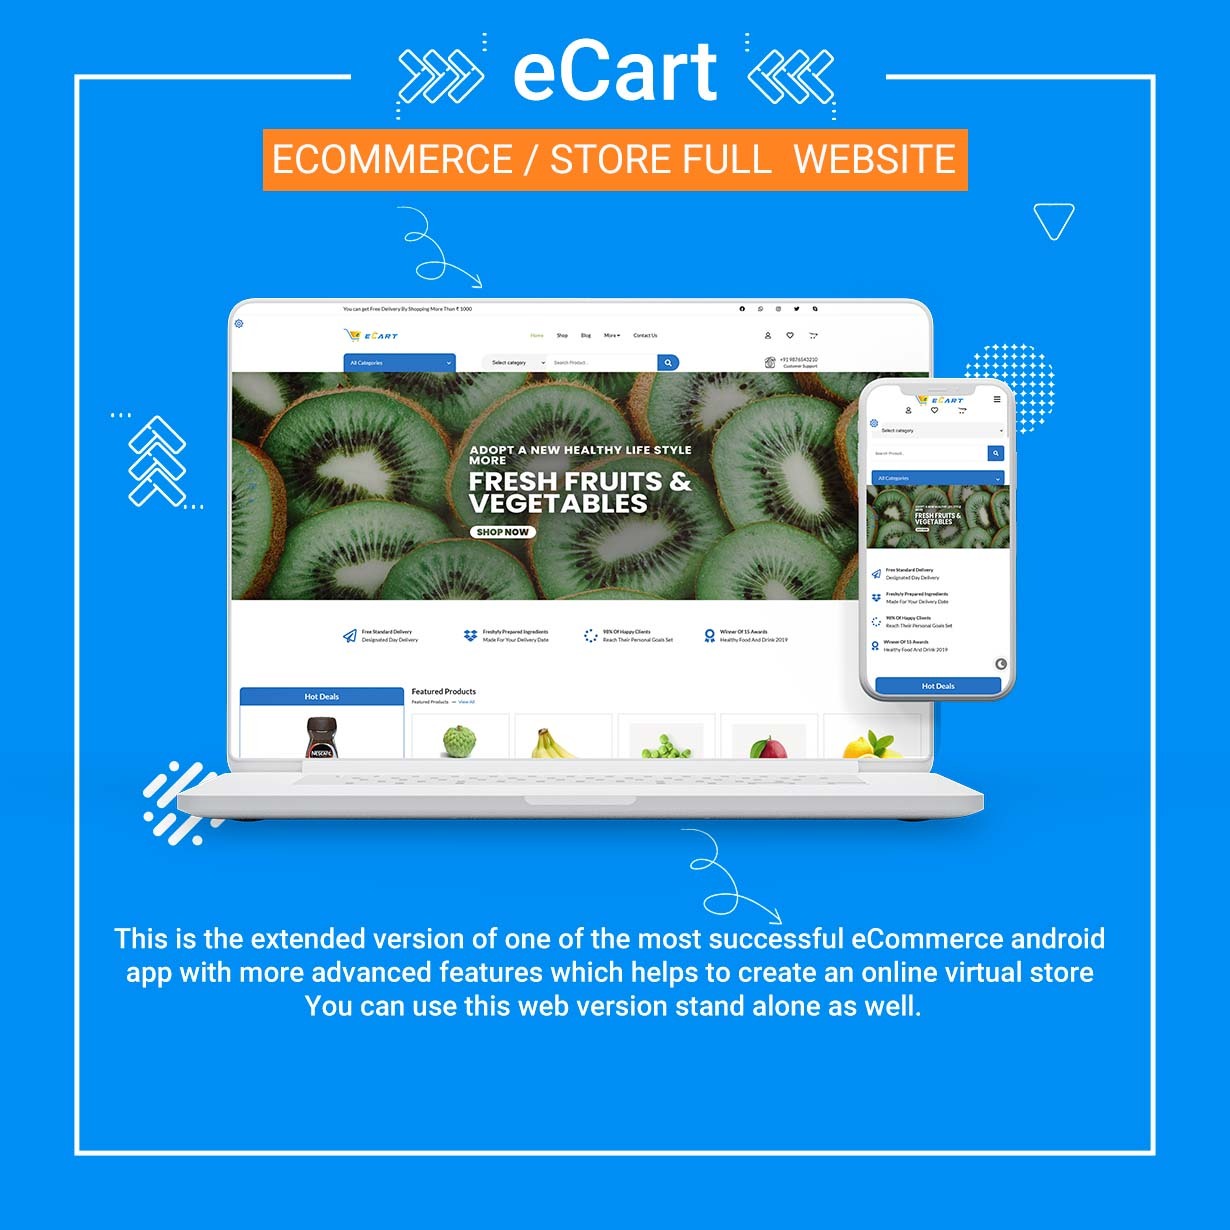 eCart Web - Ecommerce / Store Full Website - 2